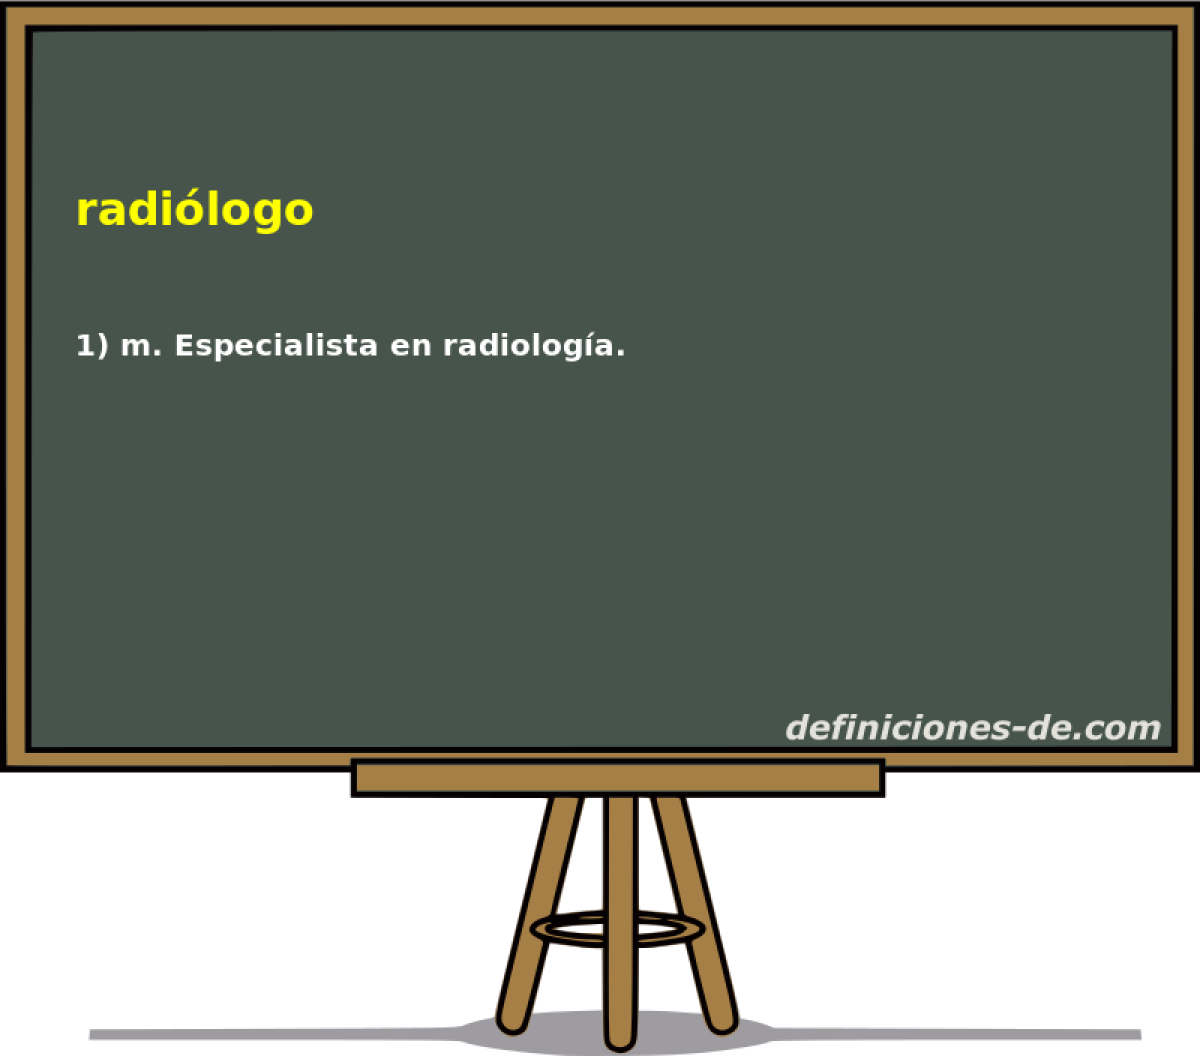 radilogo 